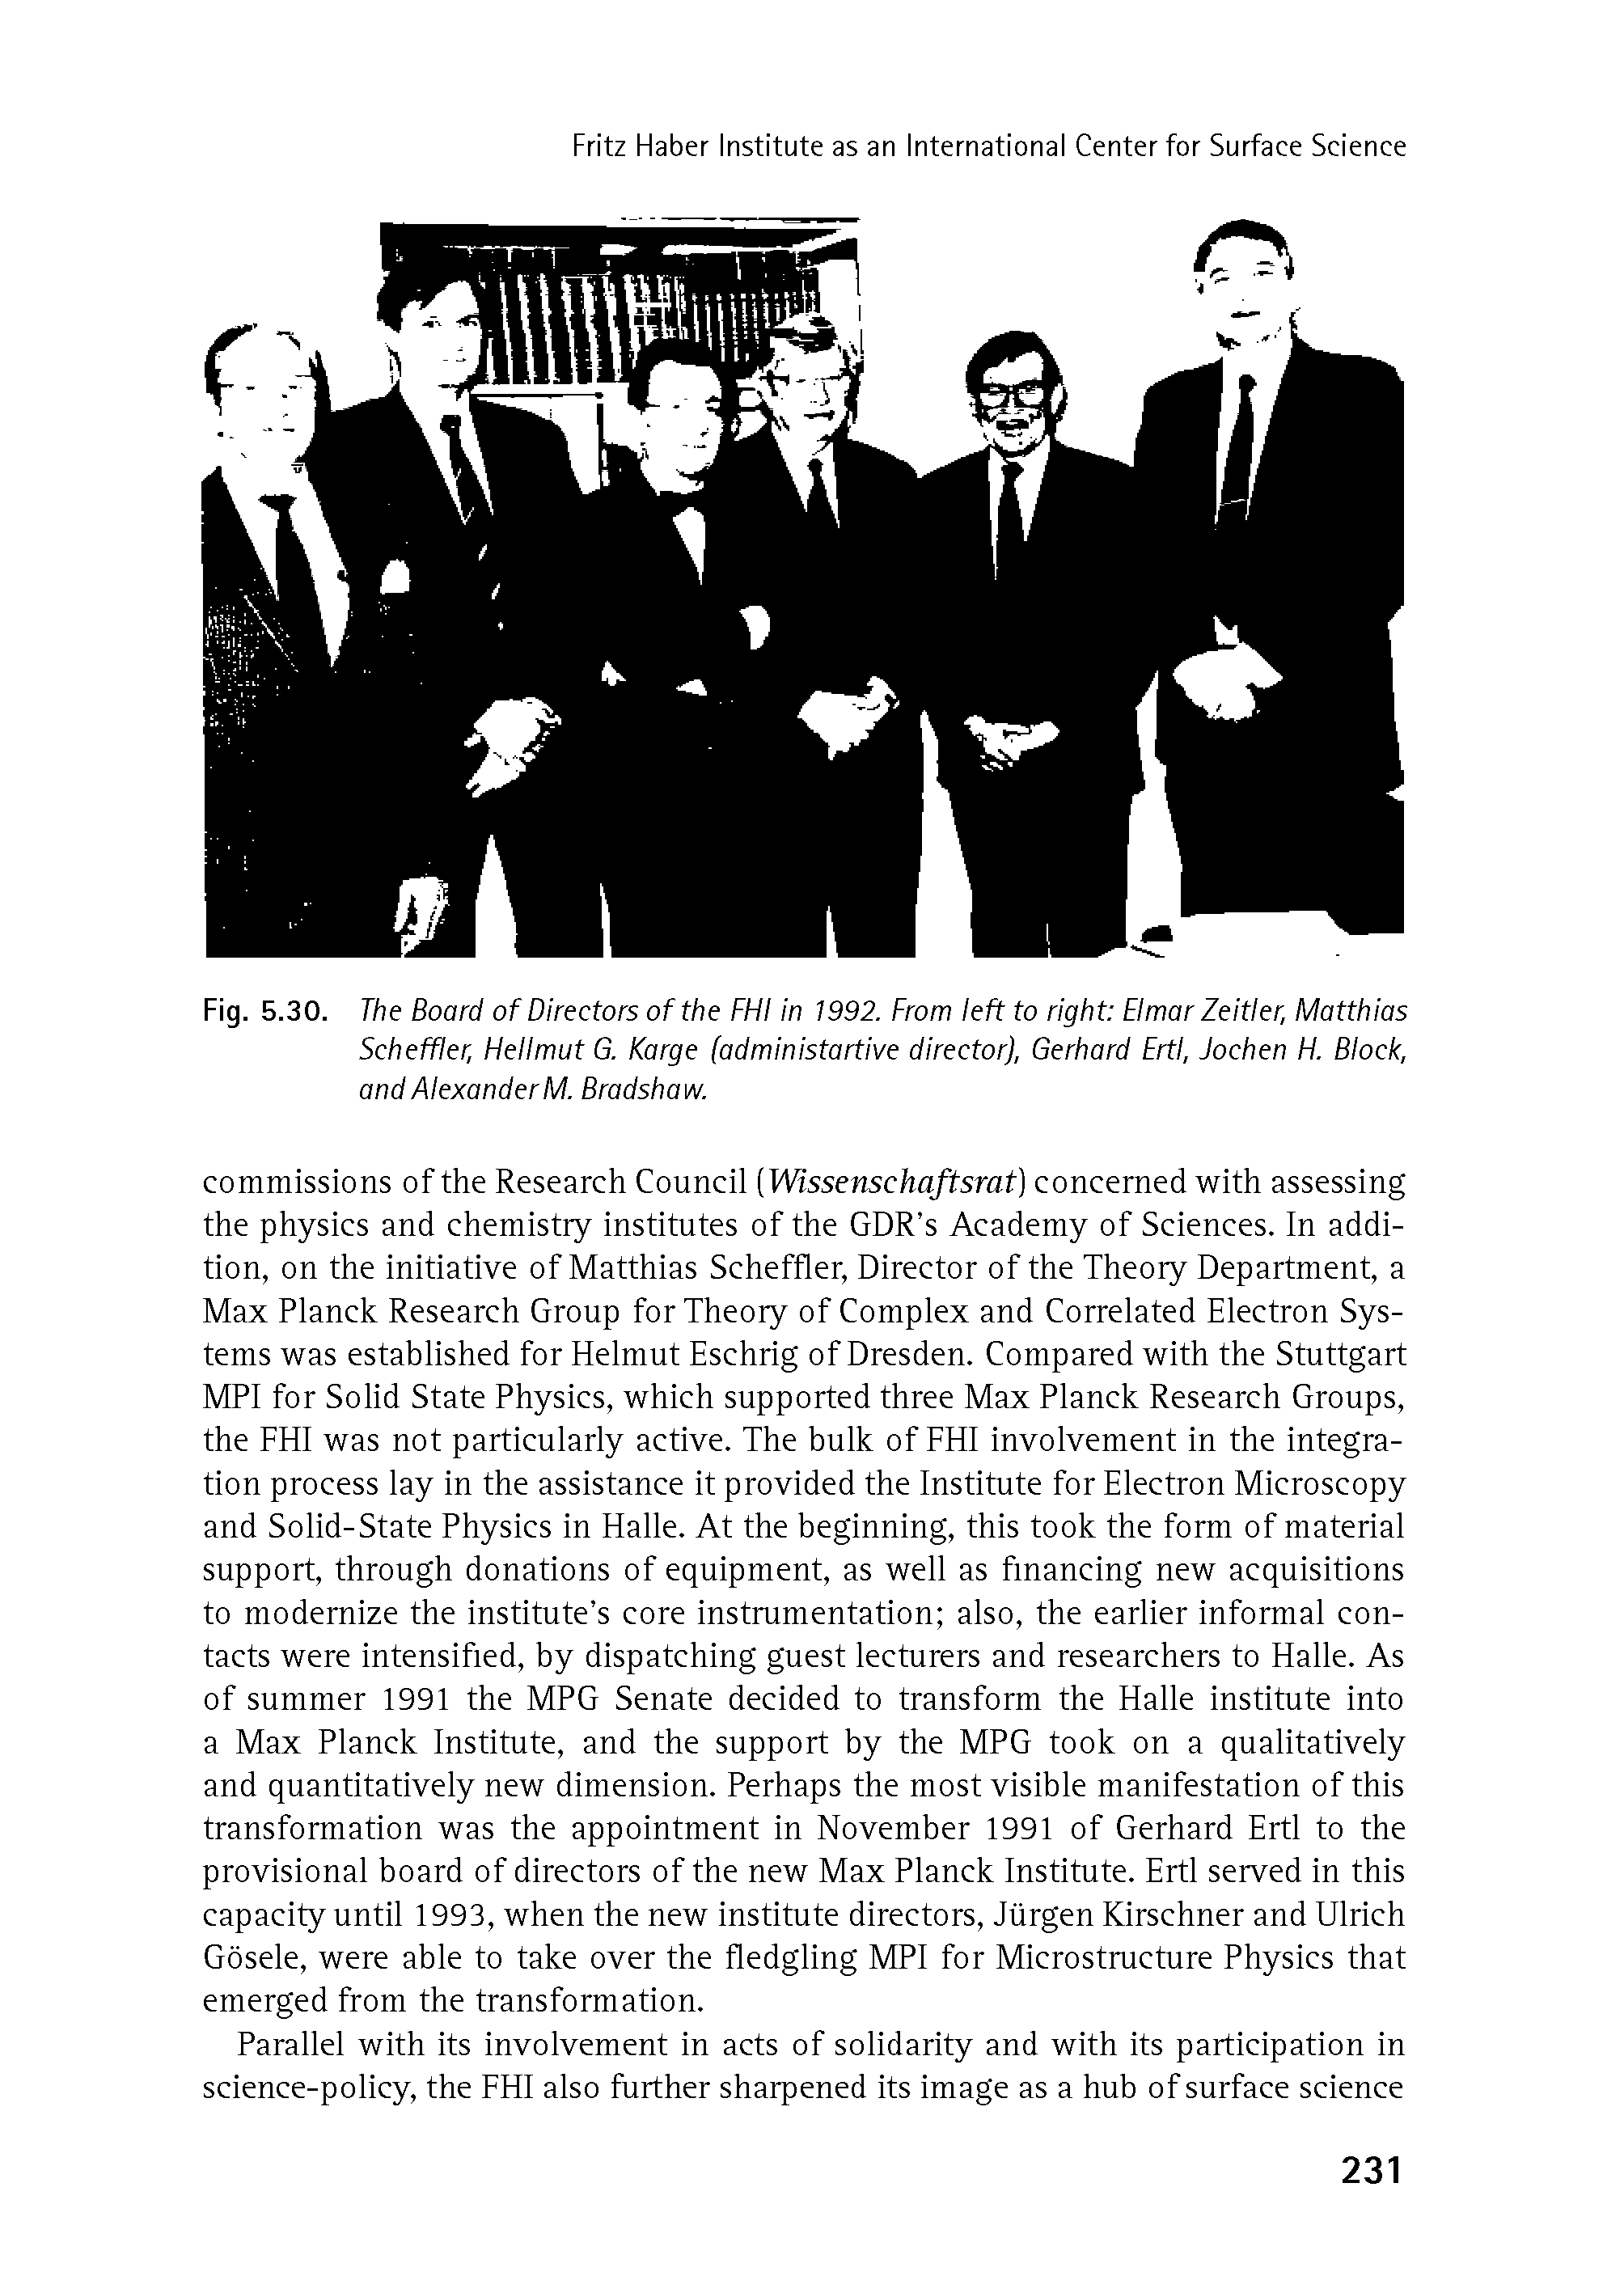 Fig. 5.30. The Board of Directors of the FHI in 1992. From left to right Elmar Zeitler, Matthias Scheffler, Fiellmut G. Karge (administartive director), Gerhard ErtI, Jochen FI. Block, and Alexander M. Bradshaw.